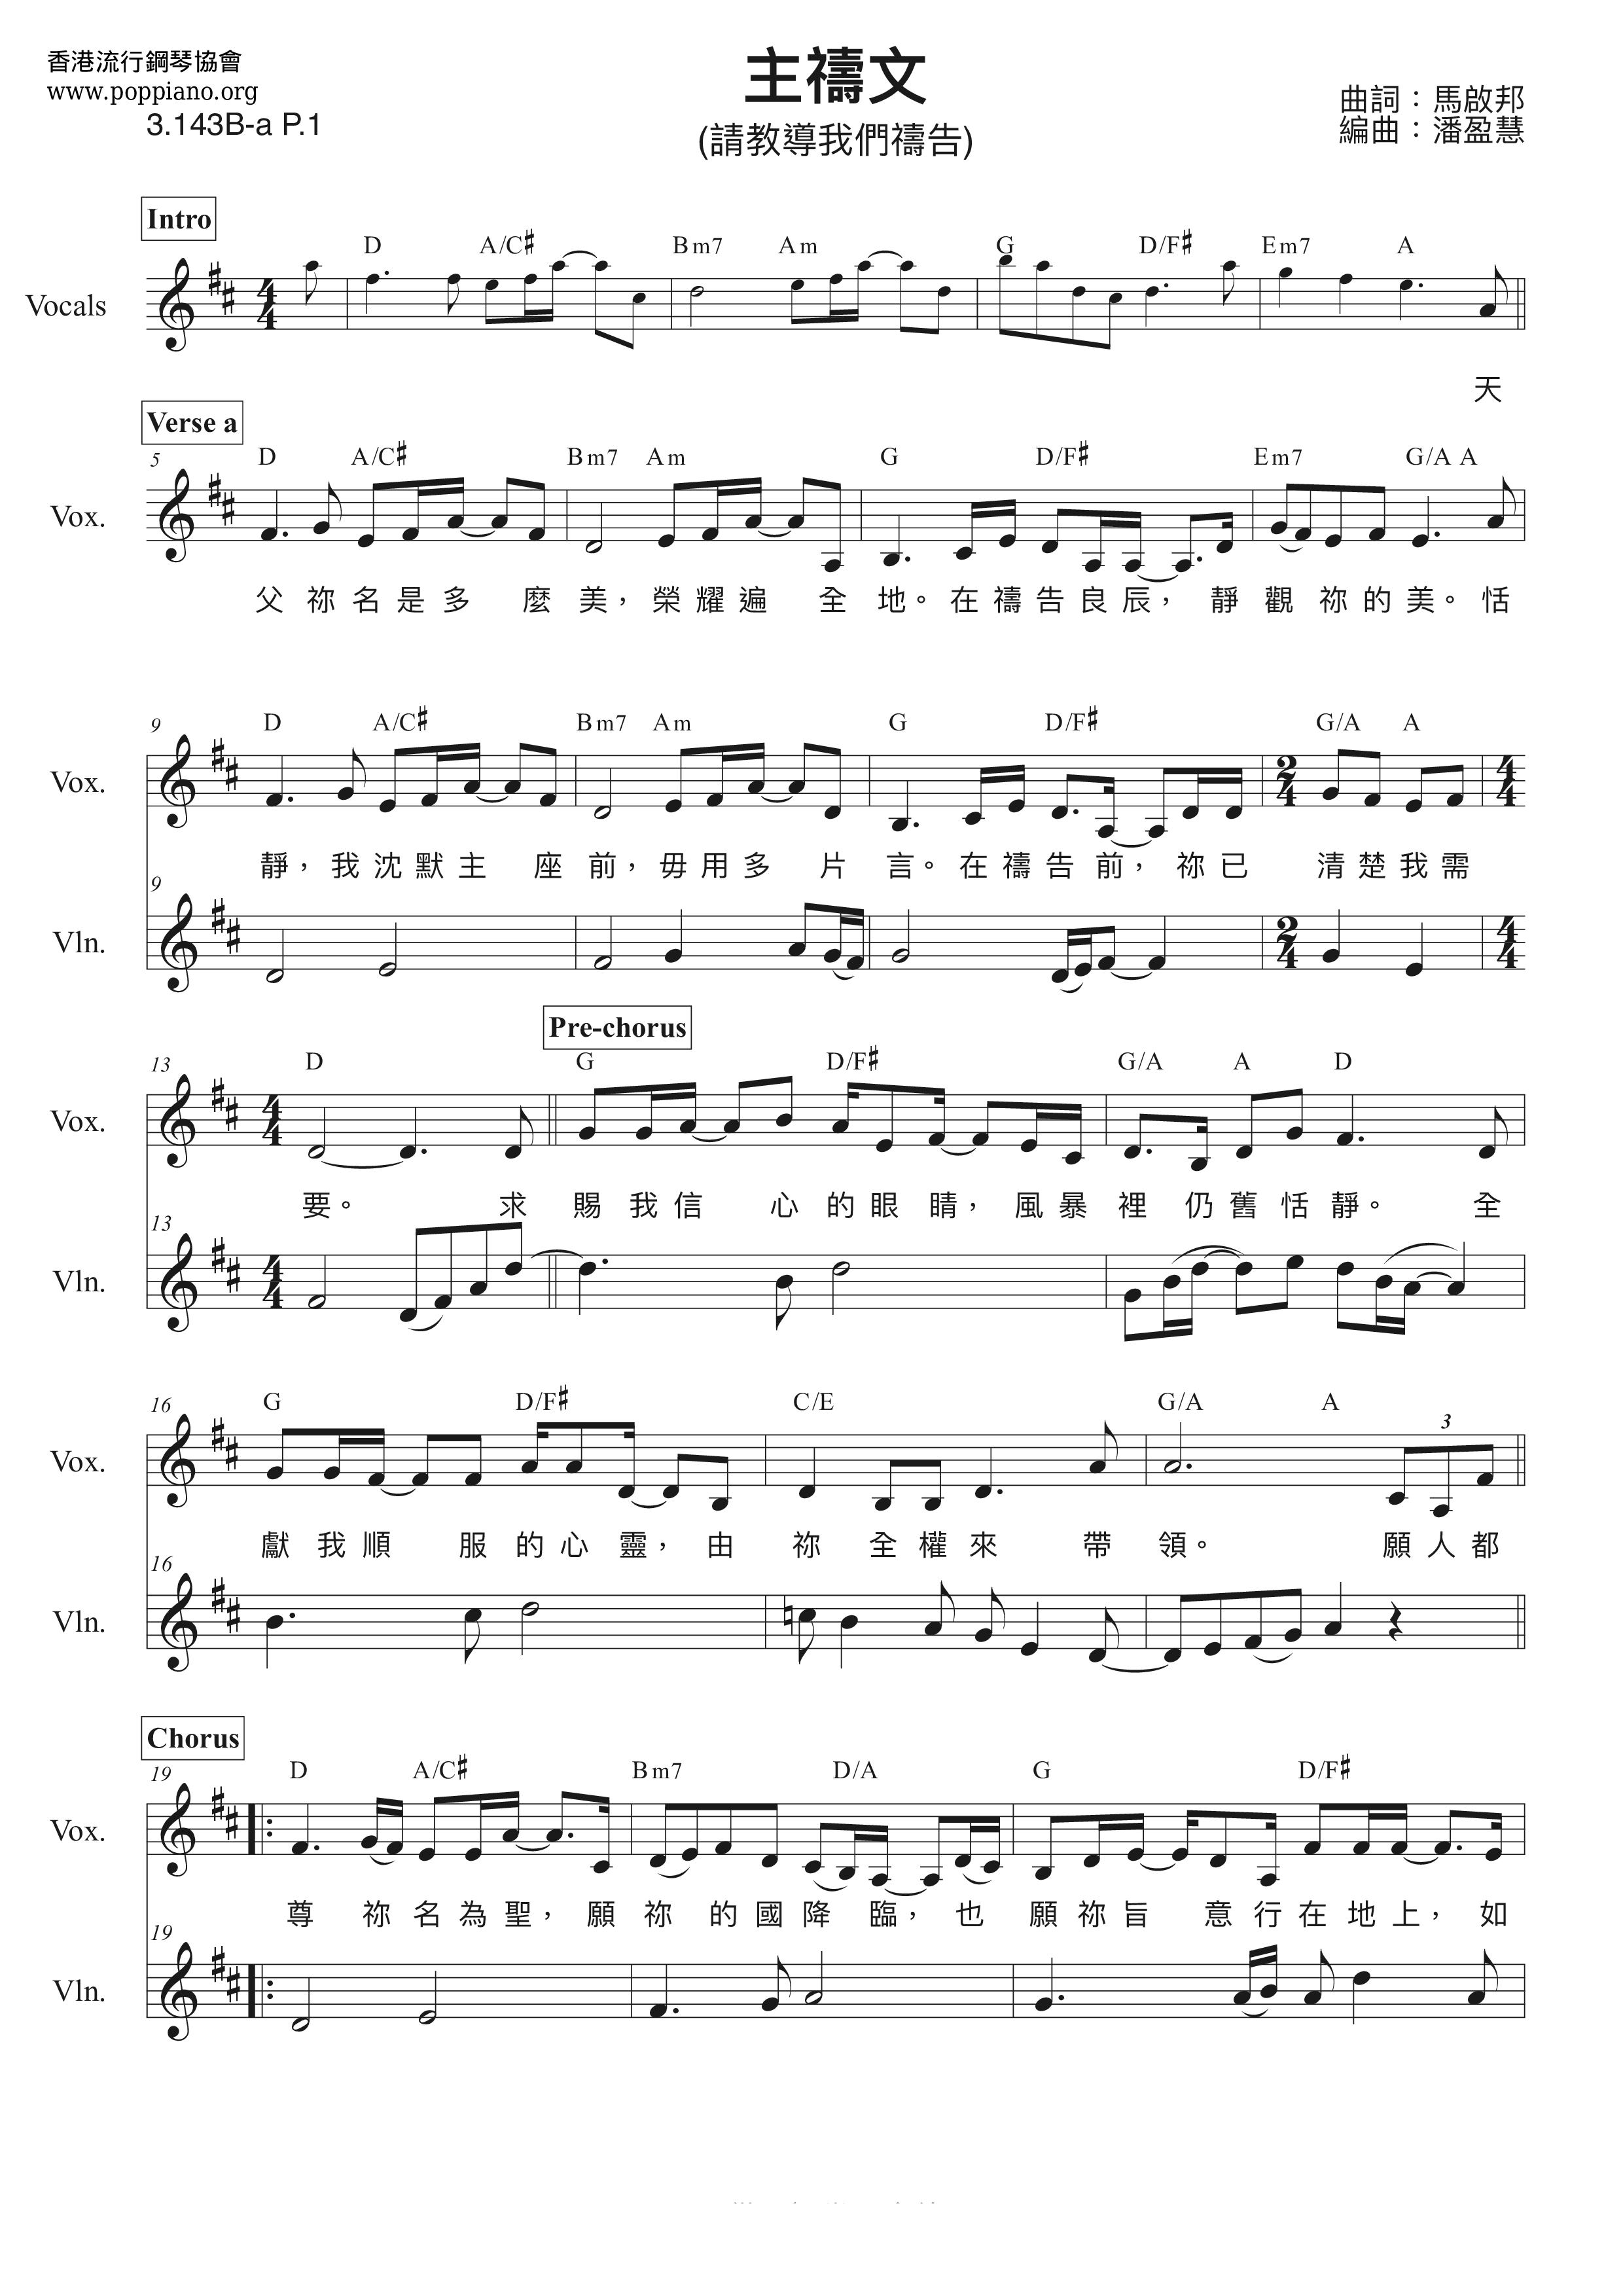 Lord's Prayer (Please Teach Us To Pray) Score